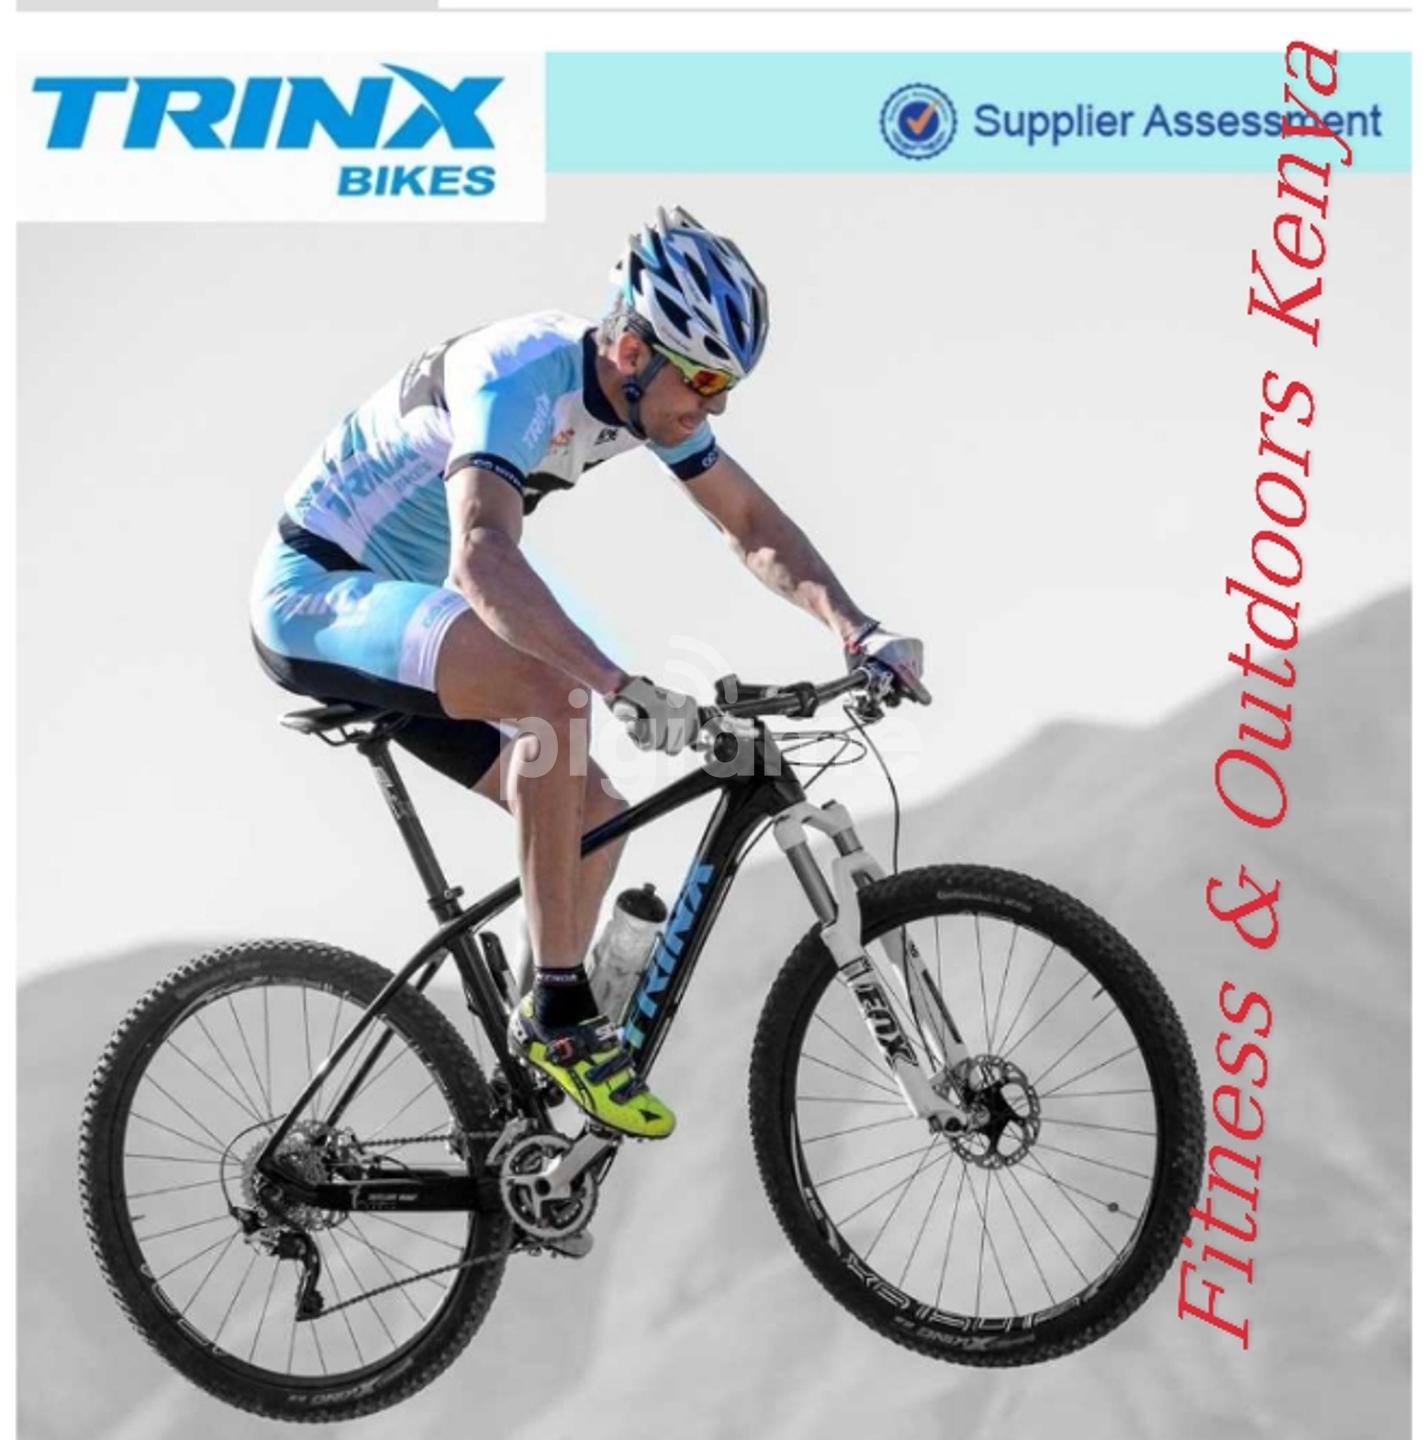 trinx bike m136 pro